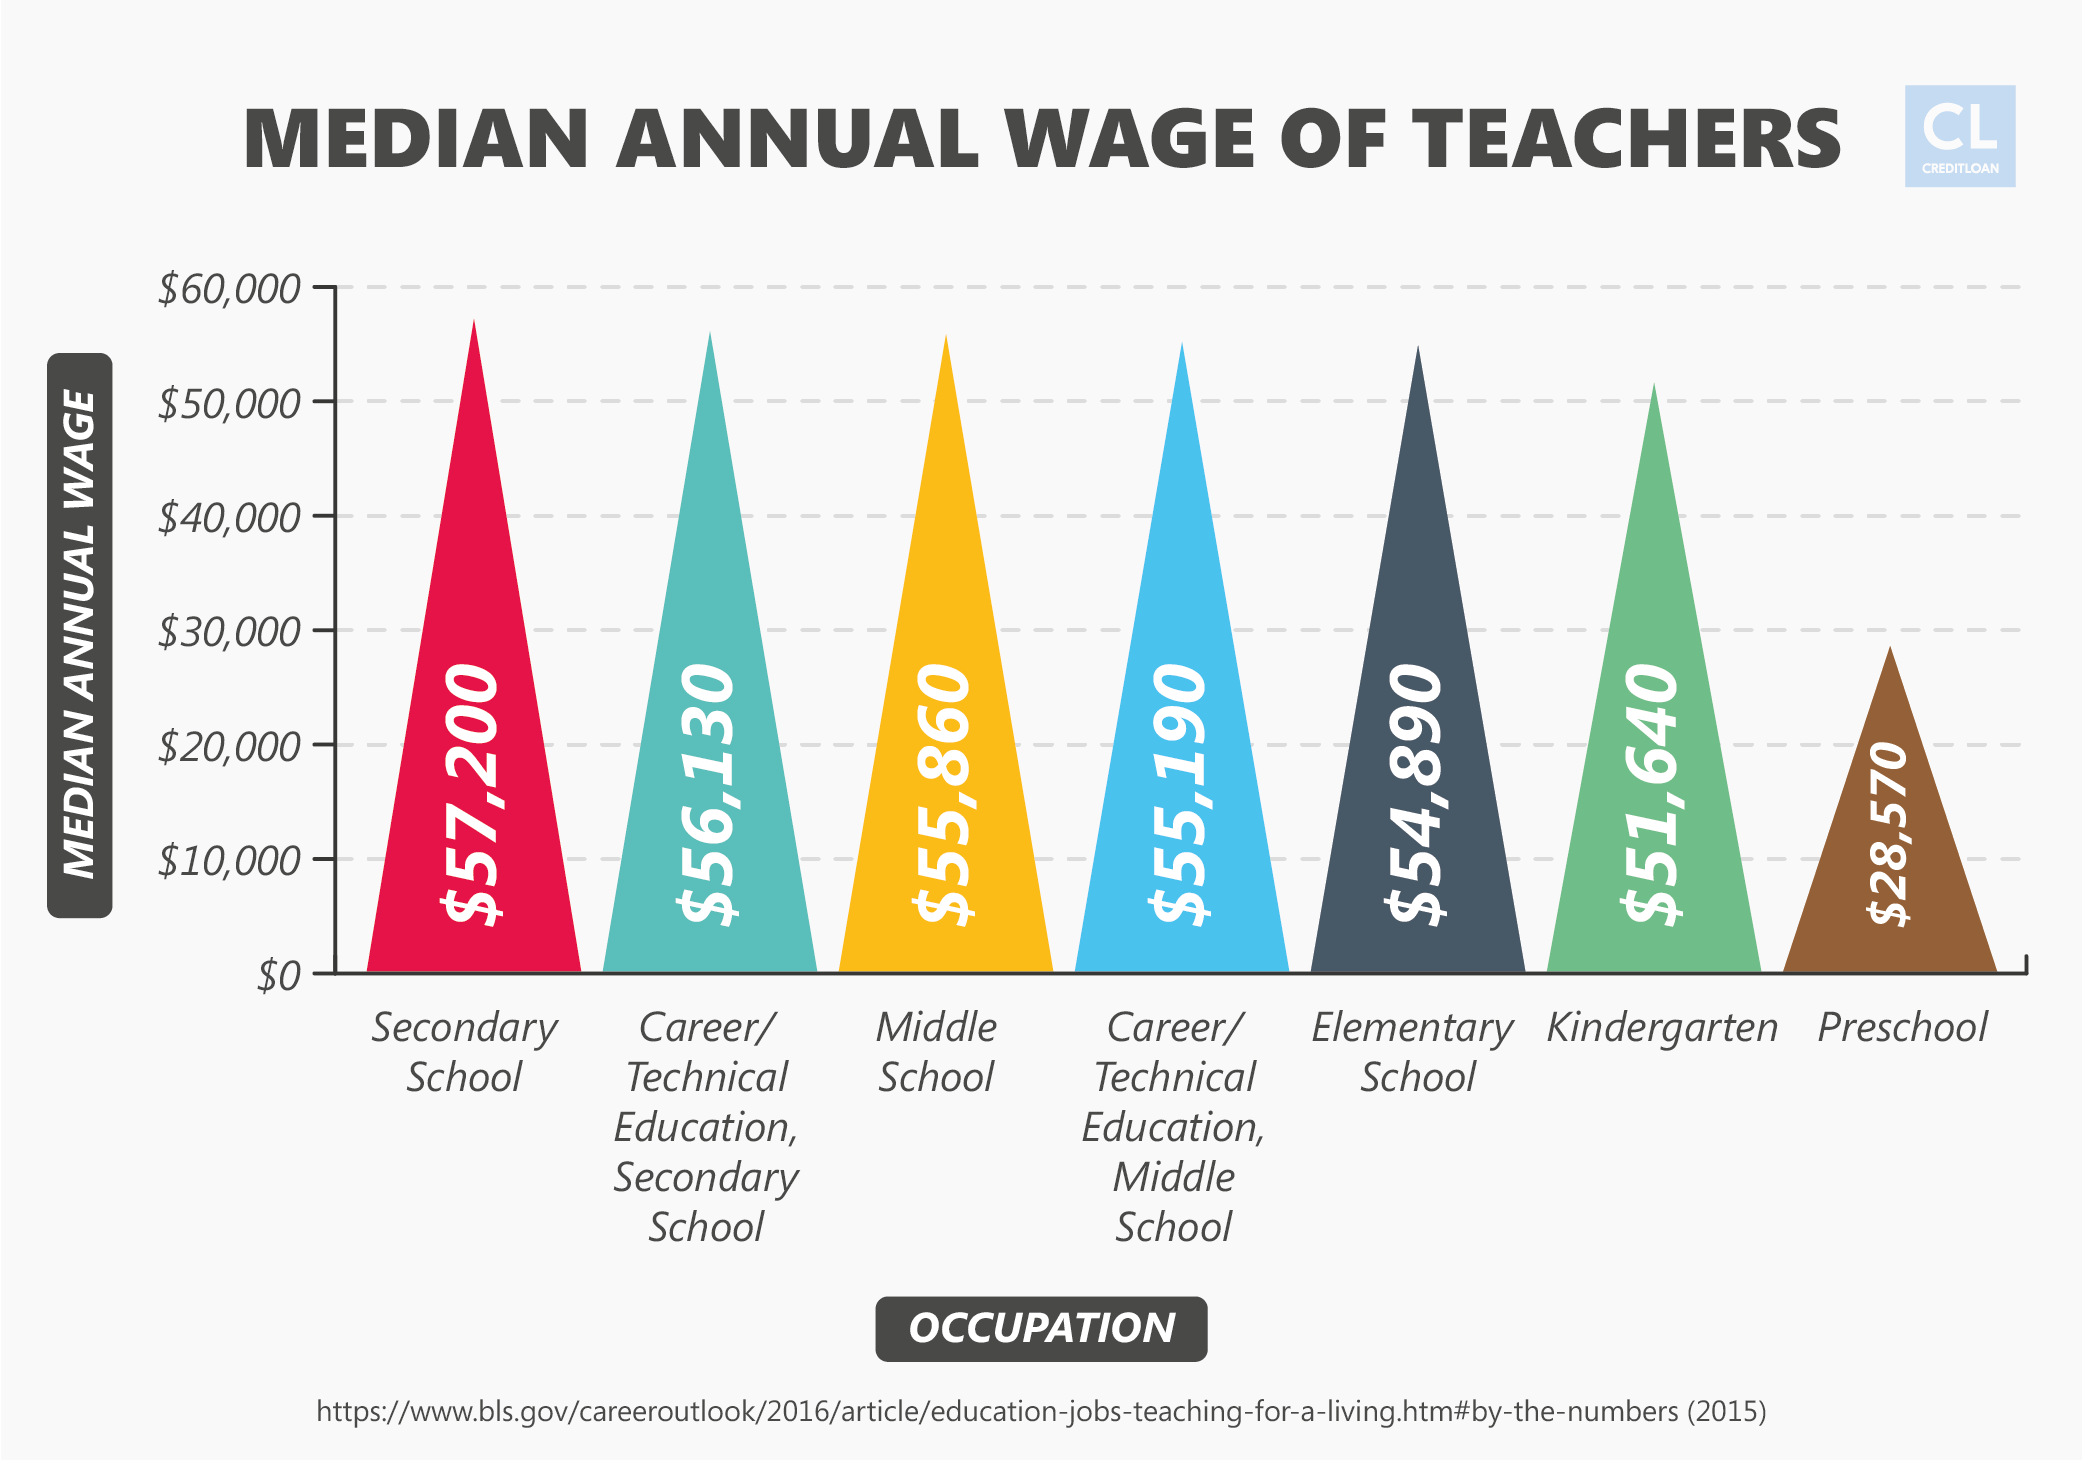 Median Annual Wage of Teachers